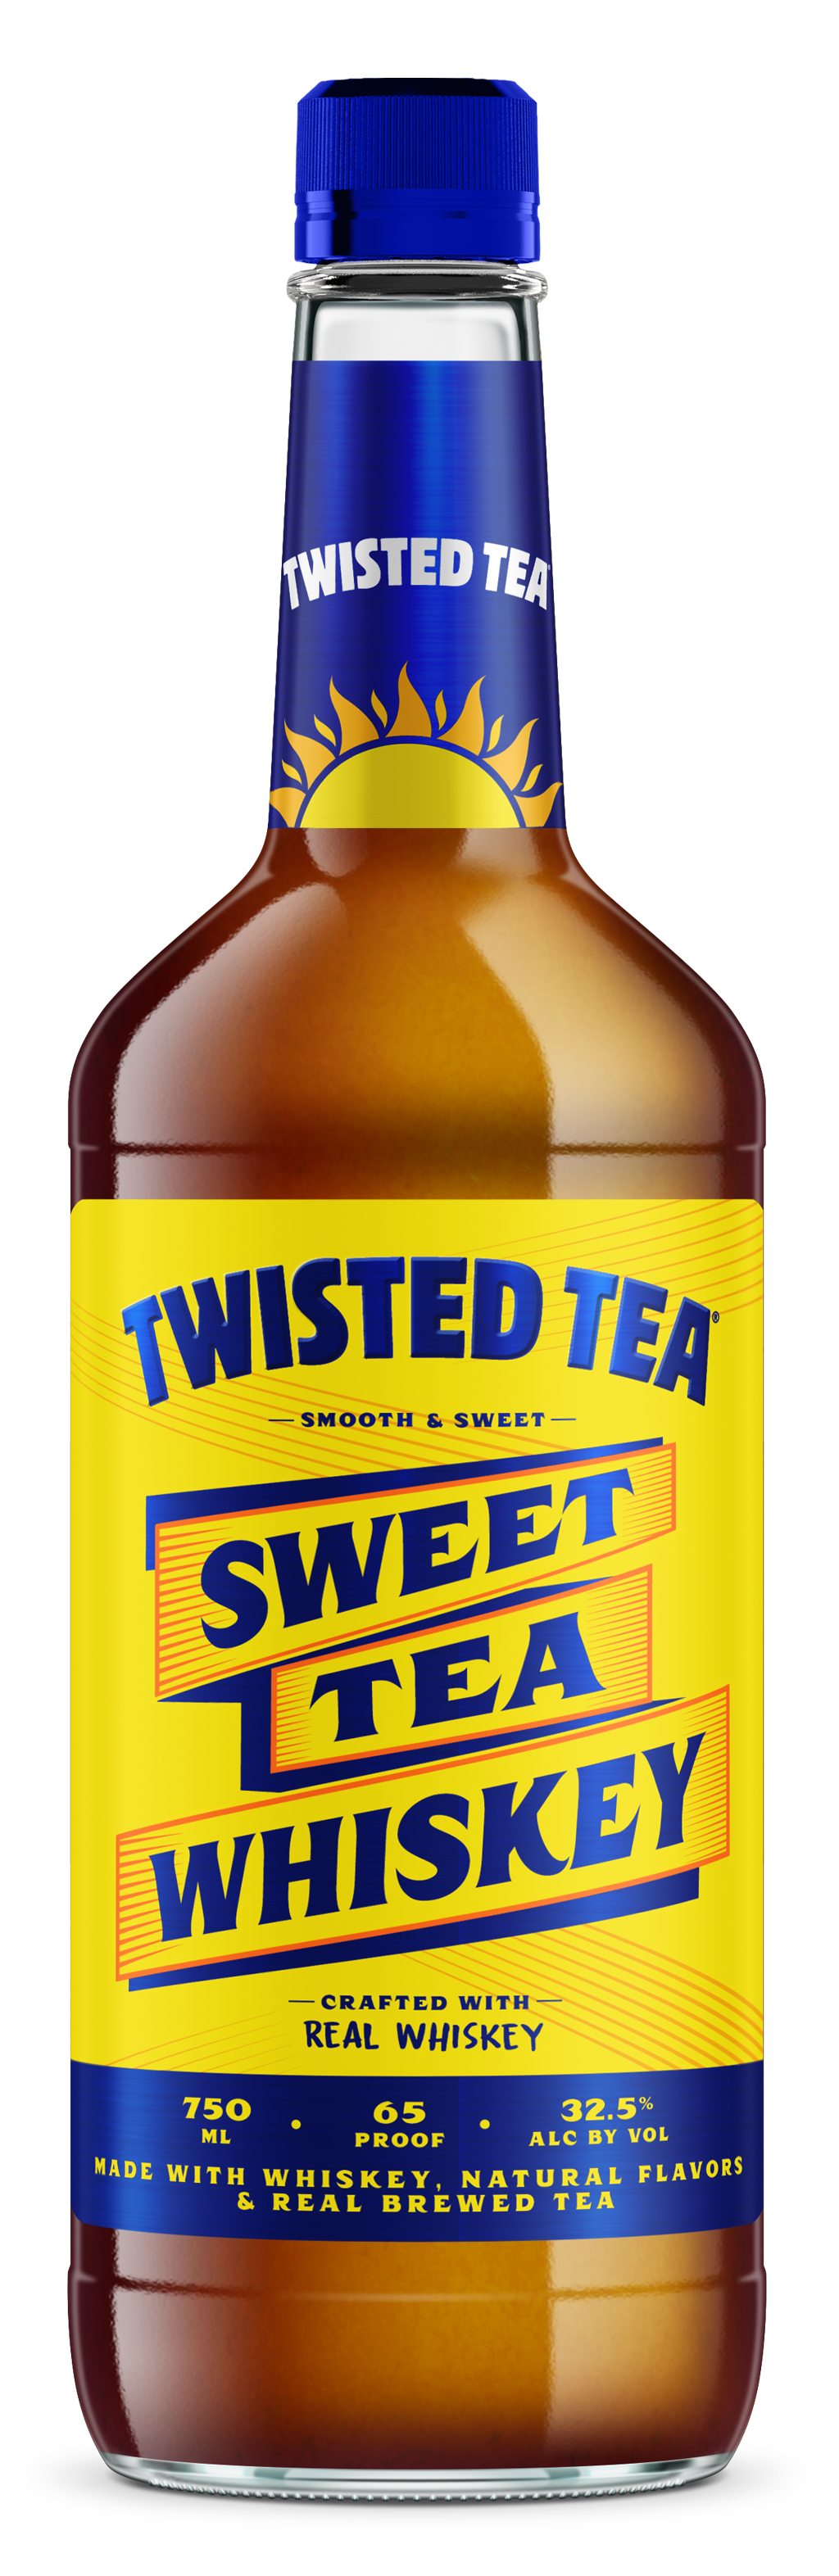 Twisted Tea Alcohol Percent